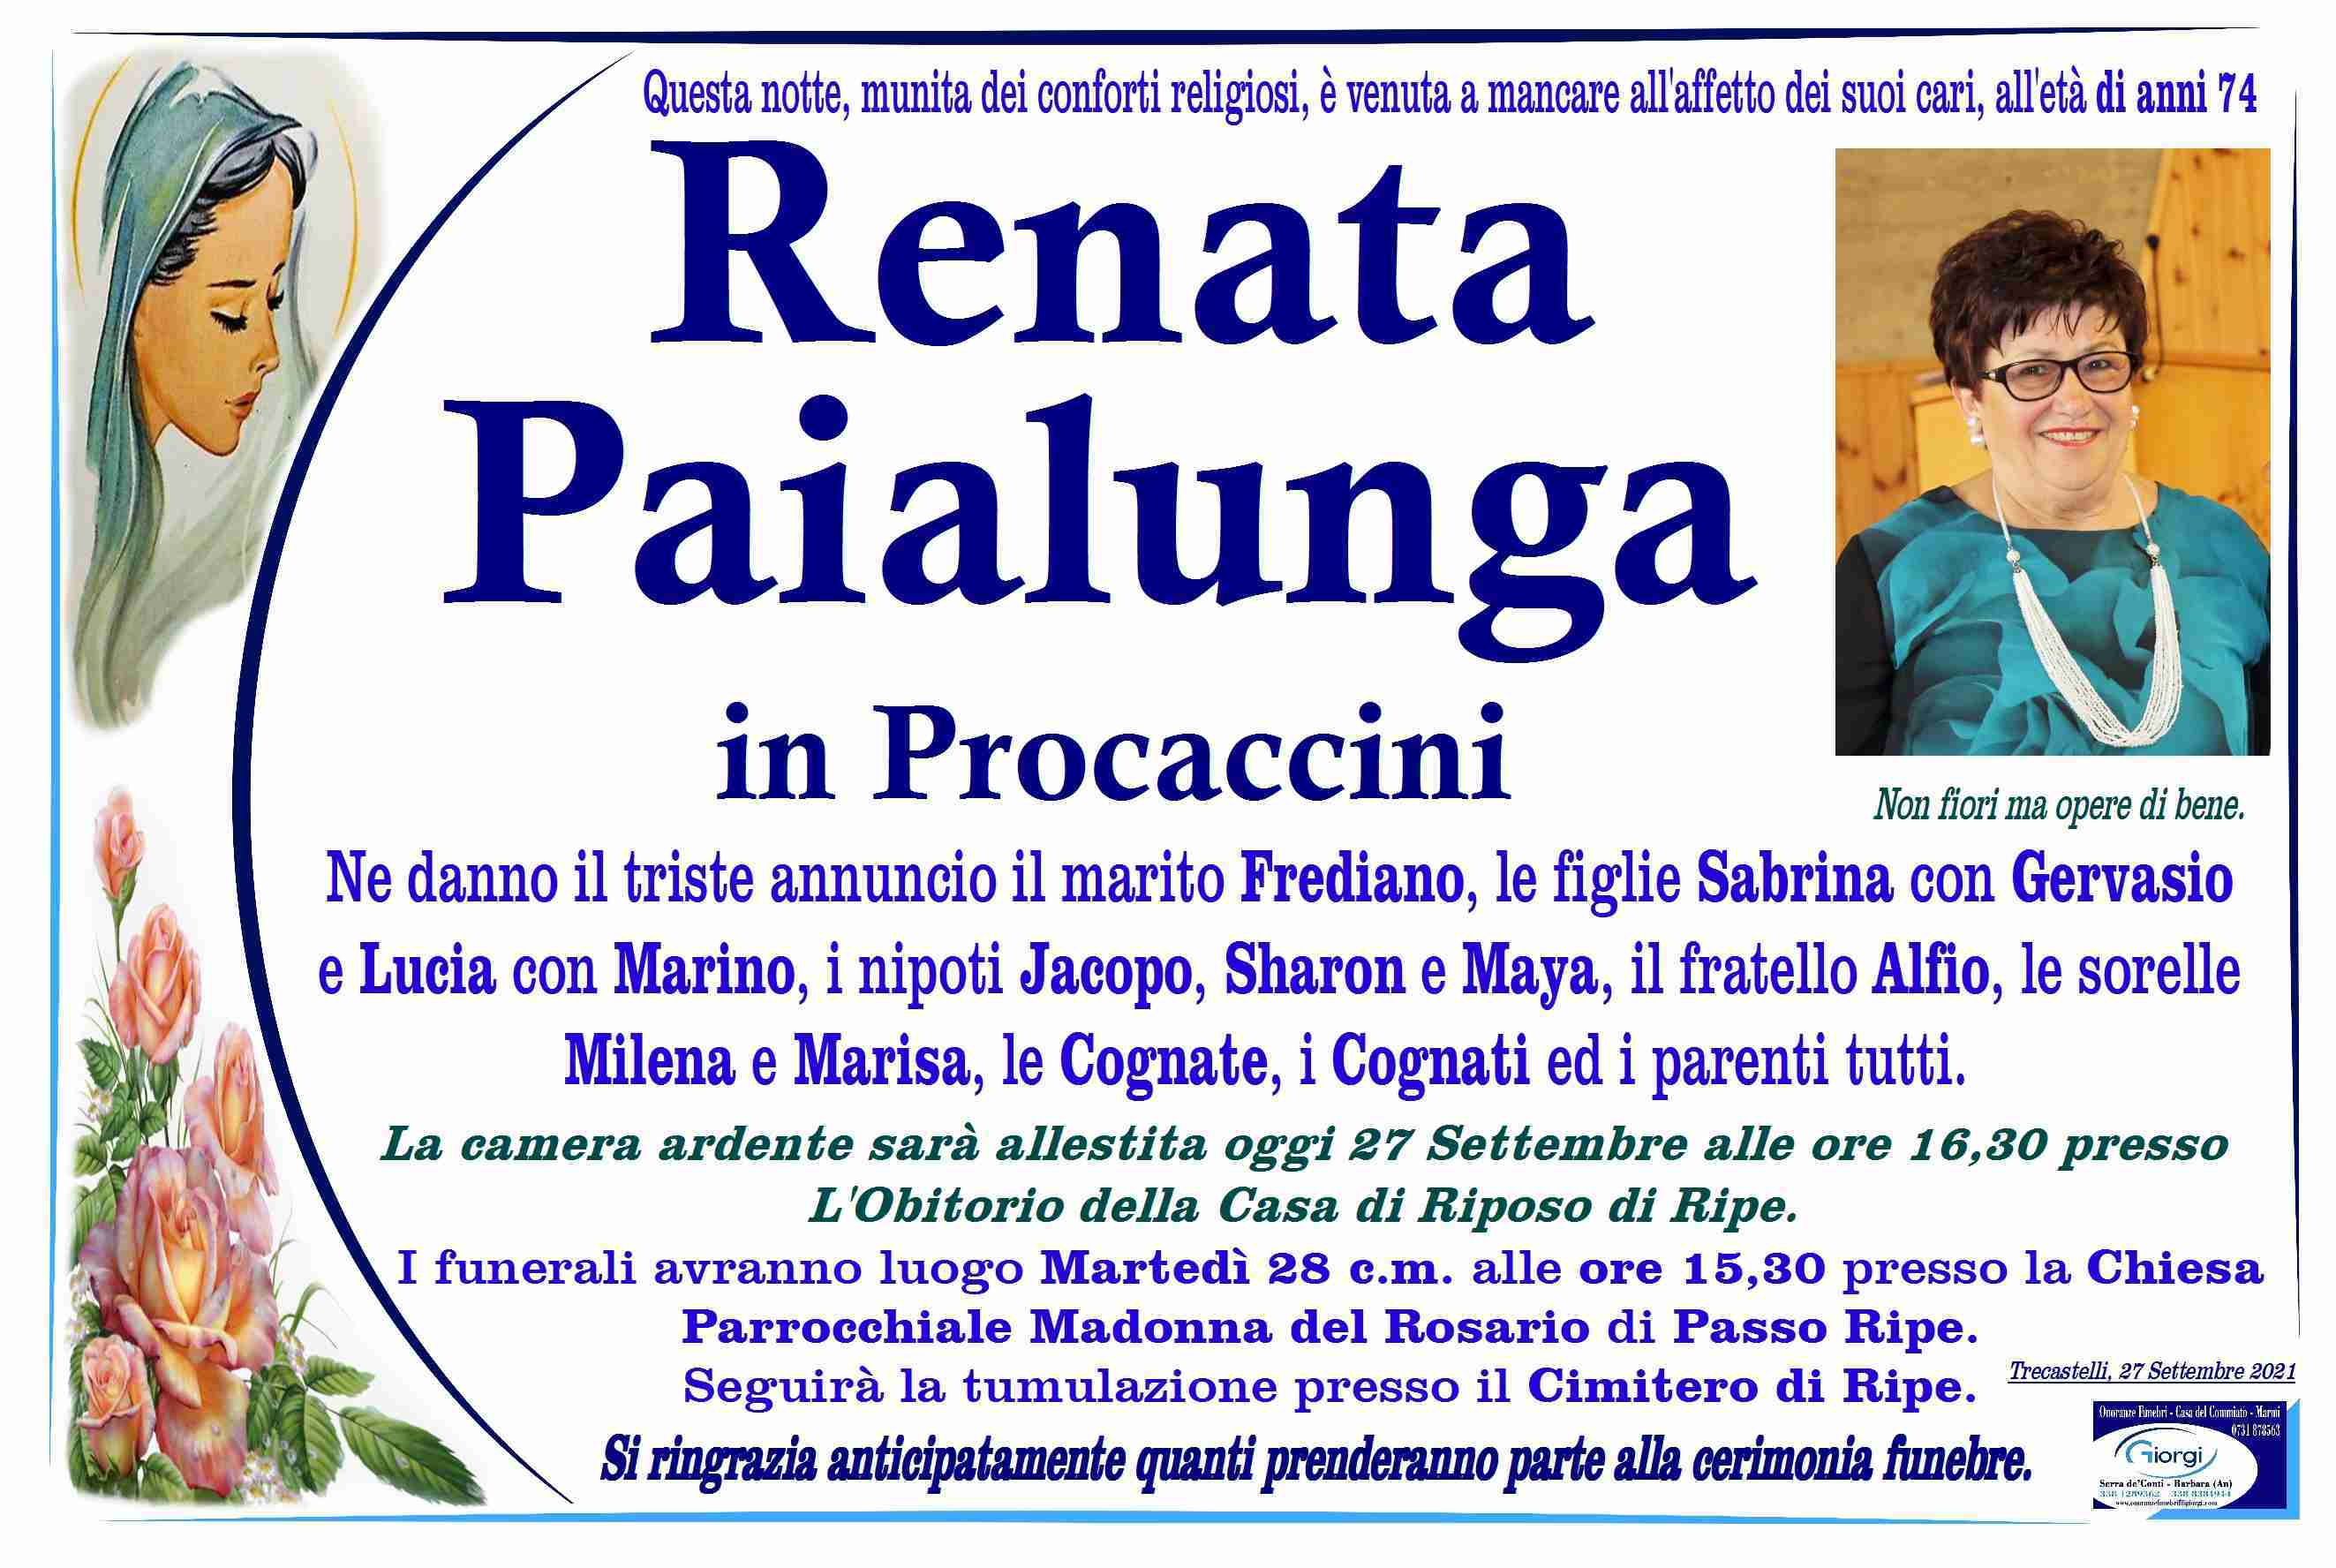 Renata Paialunga